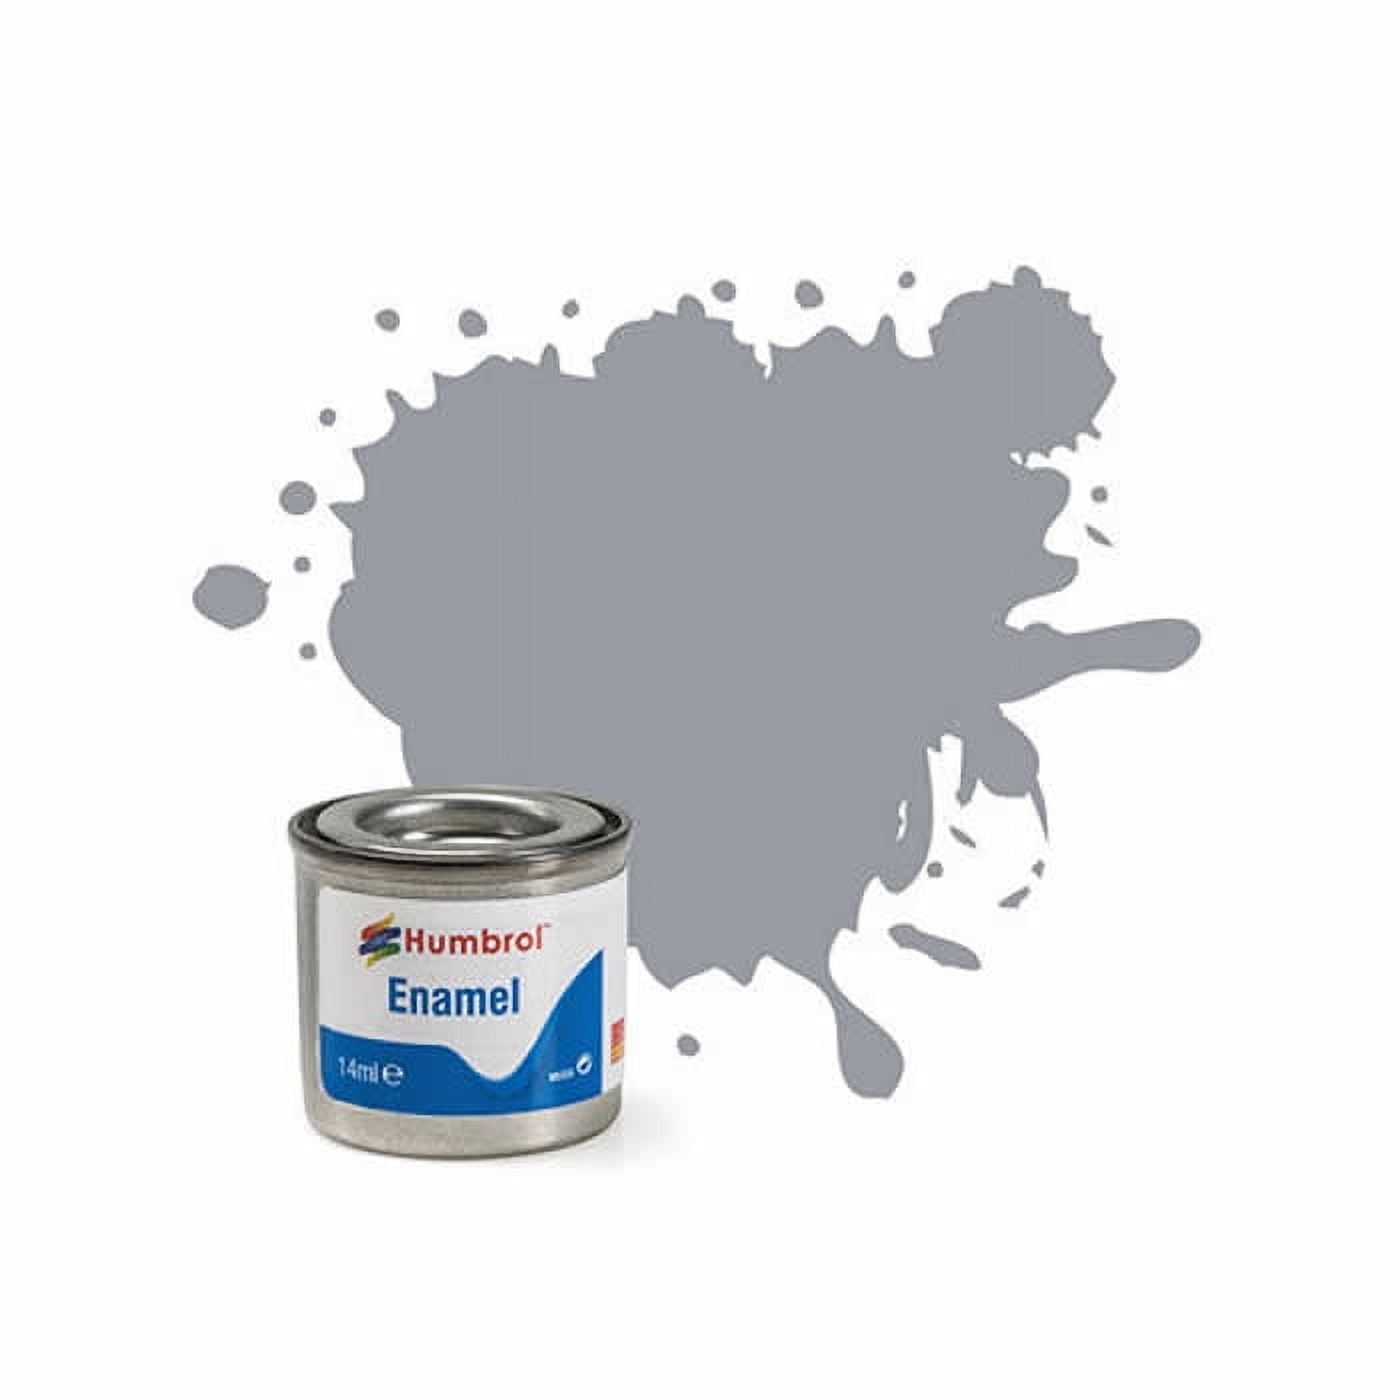 White, Rust-Oleum Specialty Gloss Appliance Enamel Paint- Quart- 2 Pack